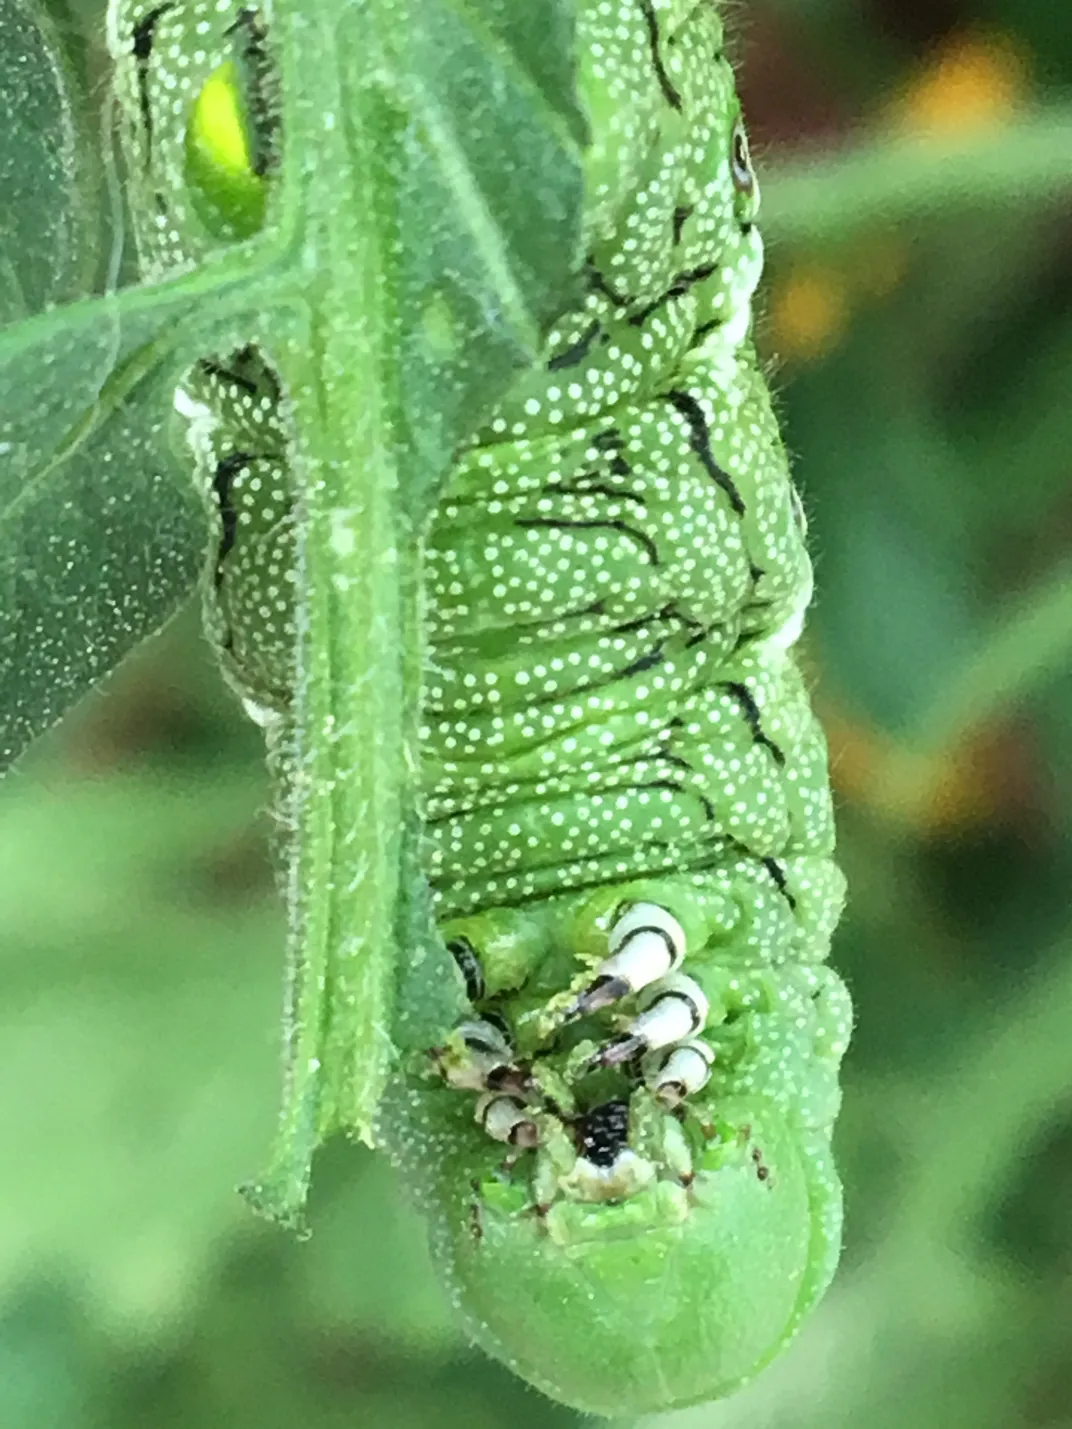 Fat caterpillar eating tomato leaves. Smithsonian Photo